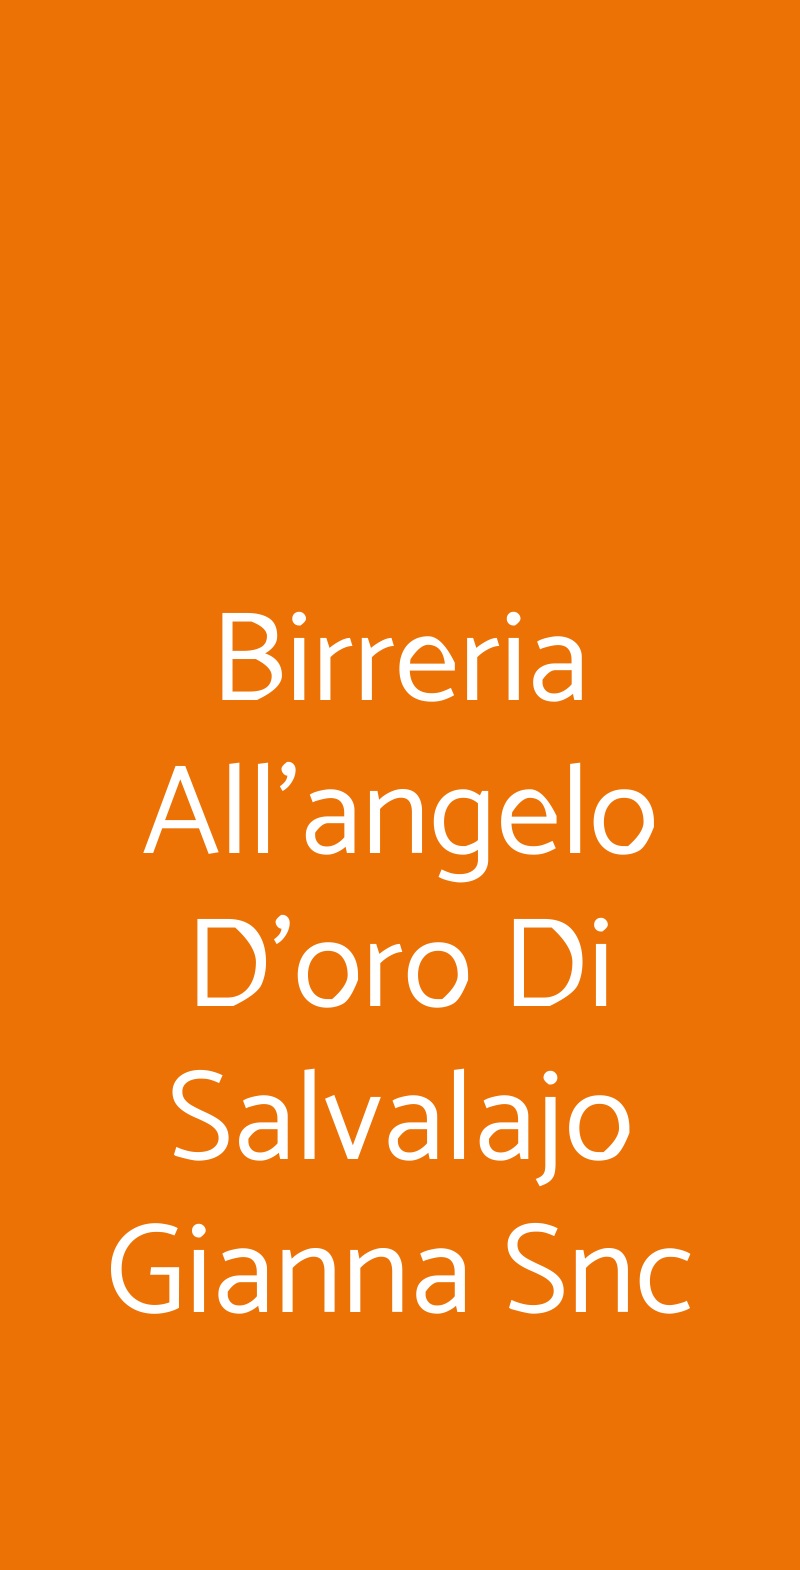 Birreria All'angelo D'oro Di Salvalajo Gianna Snc Marostica menù 1 pagina